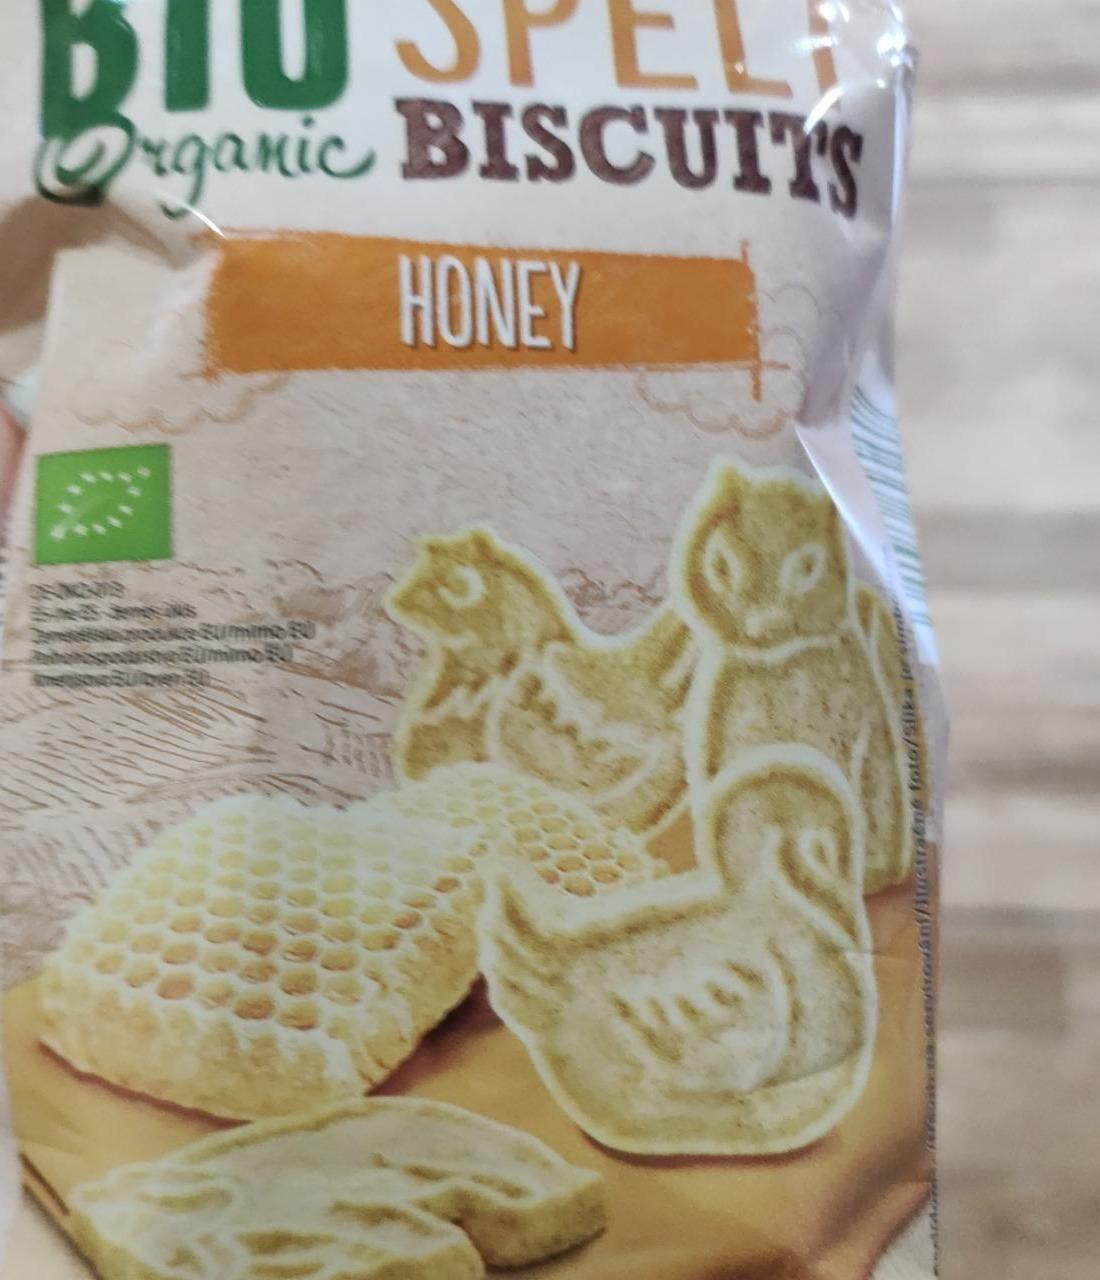 Фото - Bio Spelt Organic Biscuits Honey Sondey